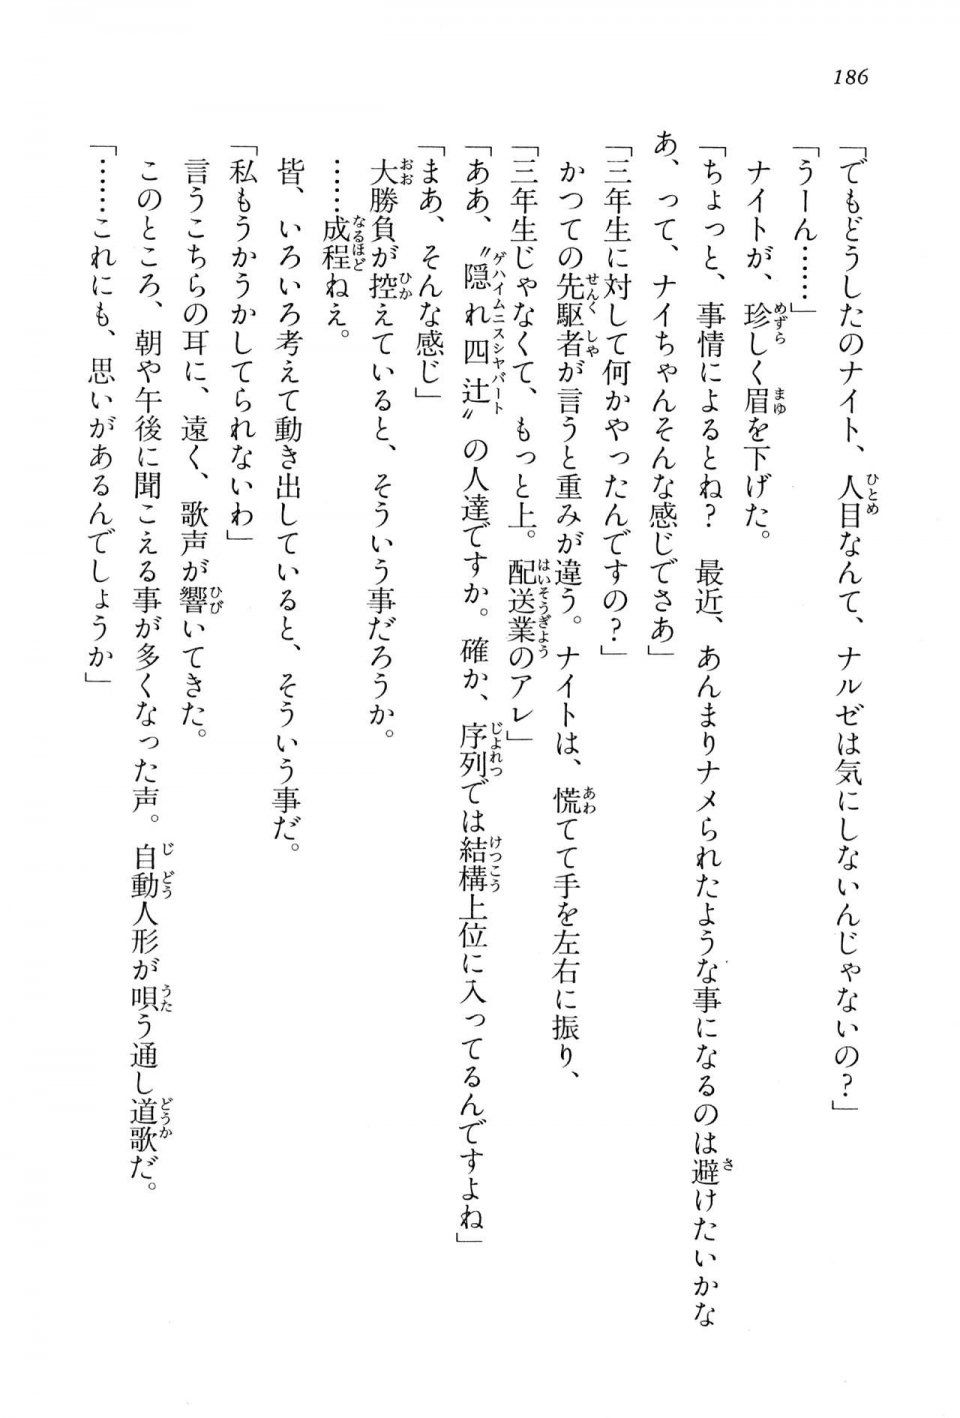 Kyoukai Senjou no Horizon BD Special Mininovel Vol 2(1B) - Photo #190